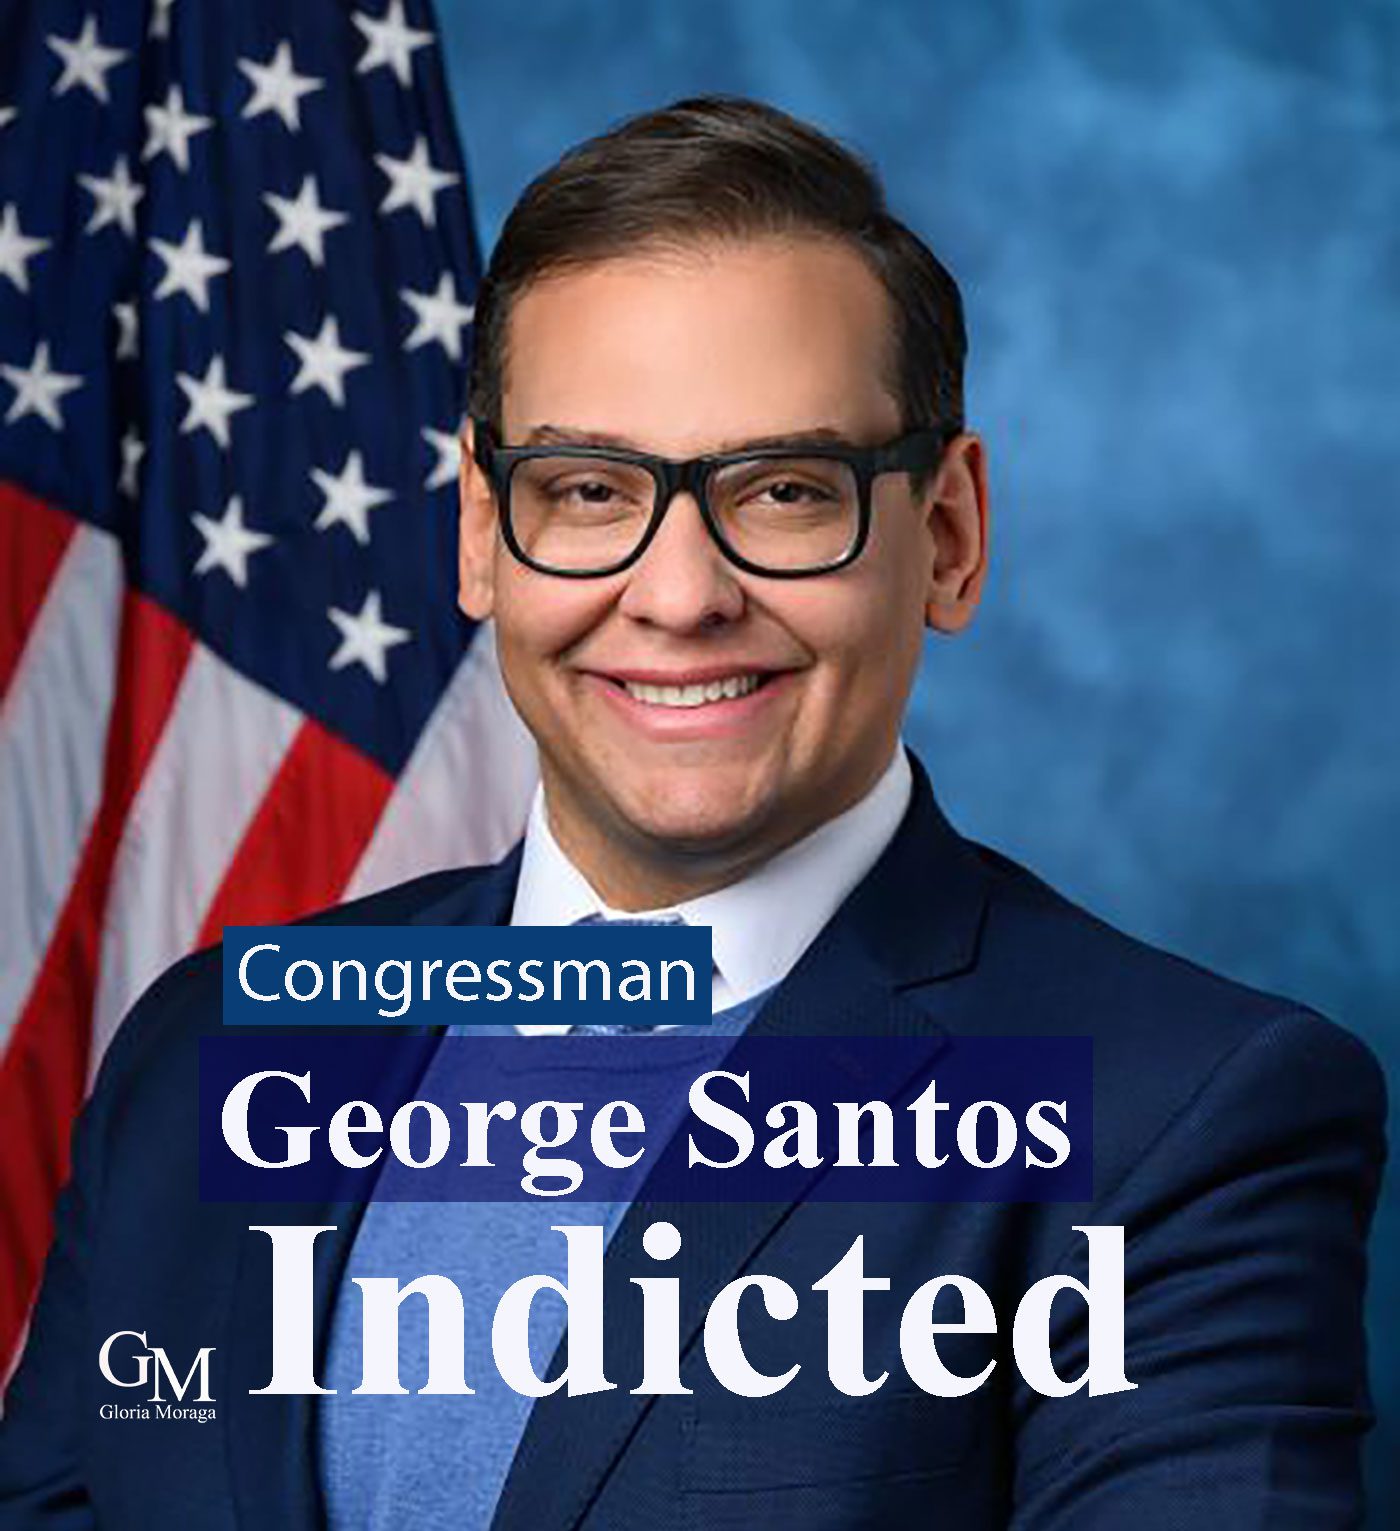 Congressman George Santos Indicted